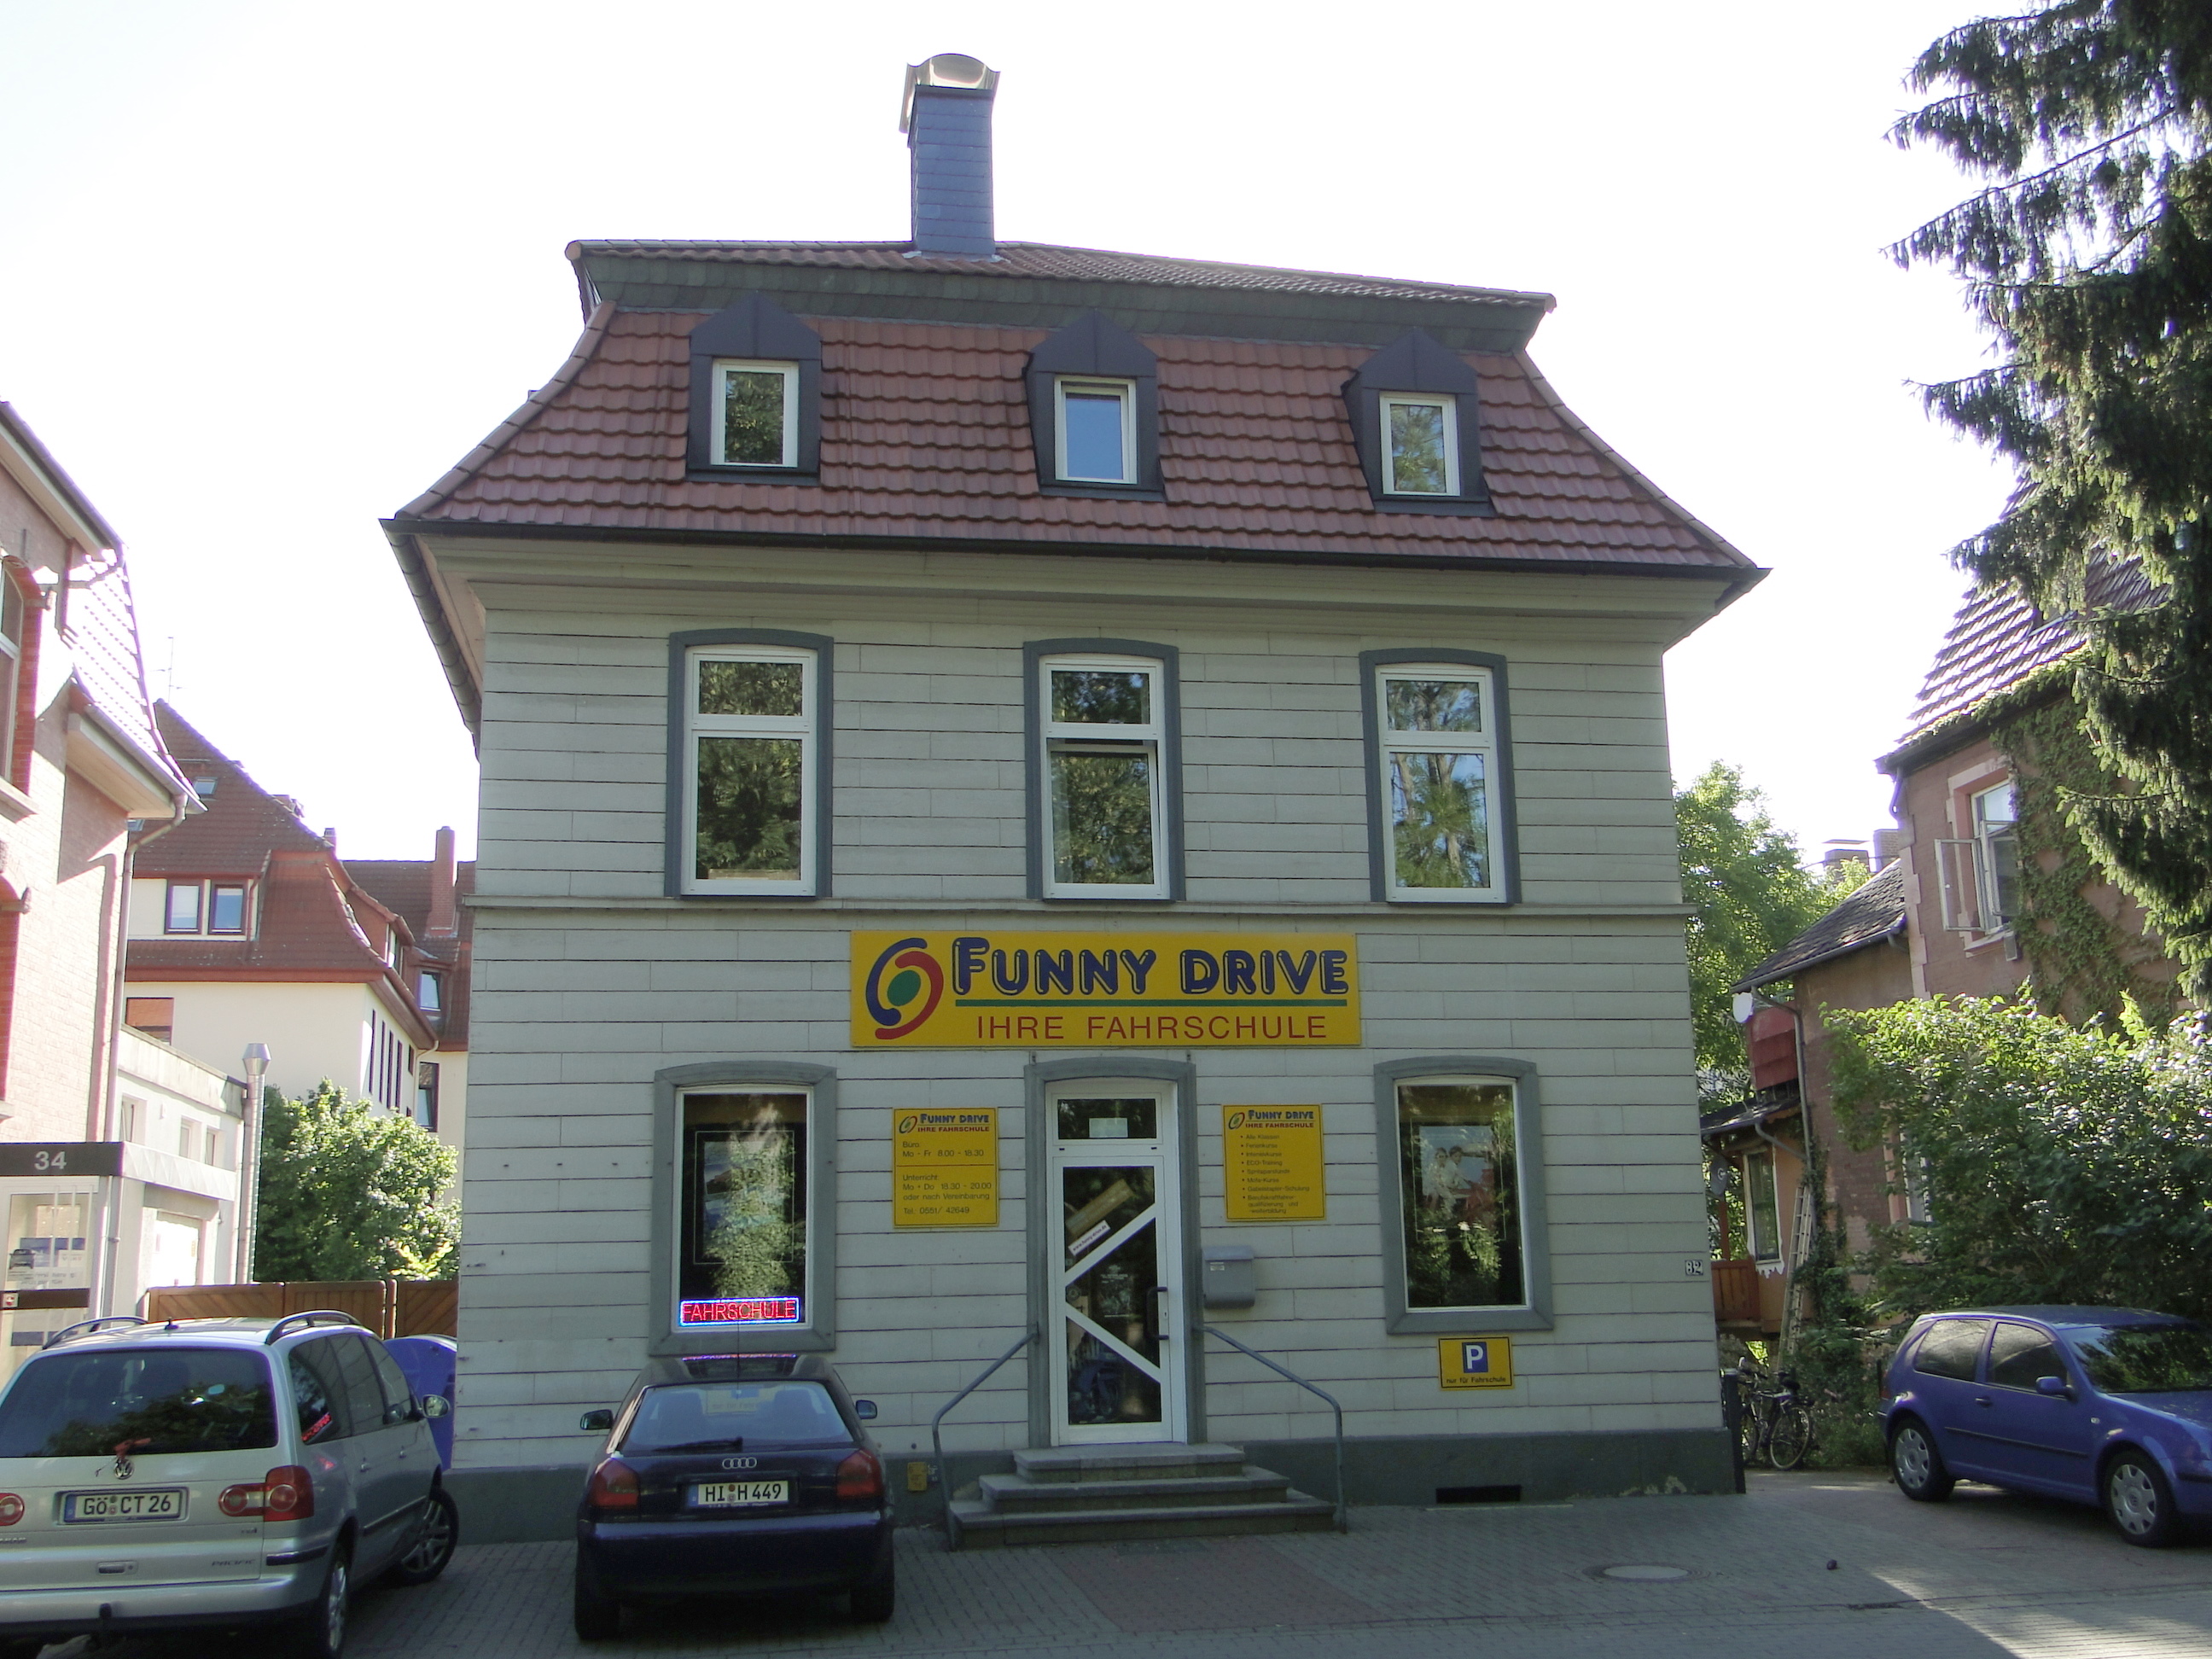 Fahrschule Funny Drive GmbH in der Reinhäuser Landstr. 32